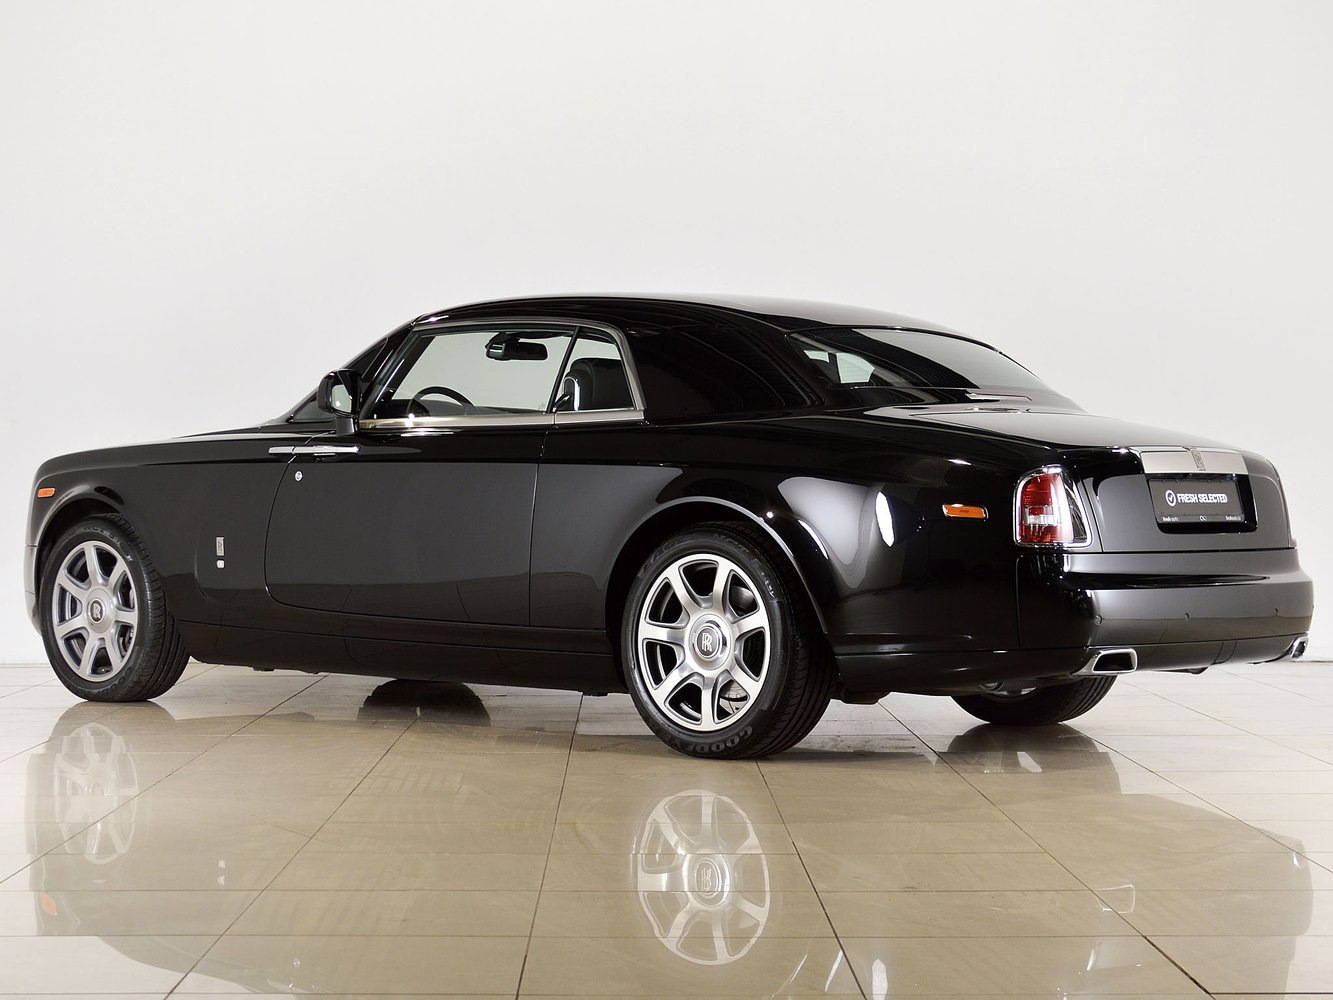 Роллс купе. Роллс Ройс купе. Rolls Royce Phantom Coupe. Rolls Royce Phantom 2010. Rolls Royce Phantom 7.